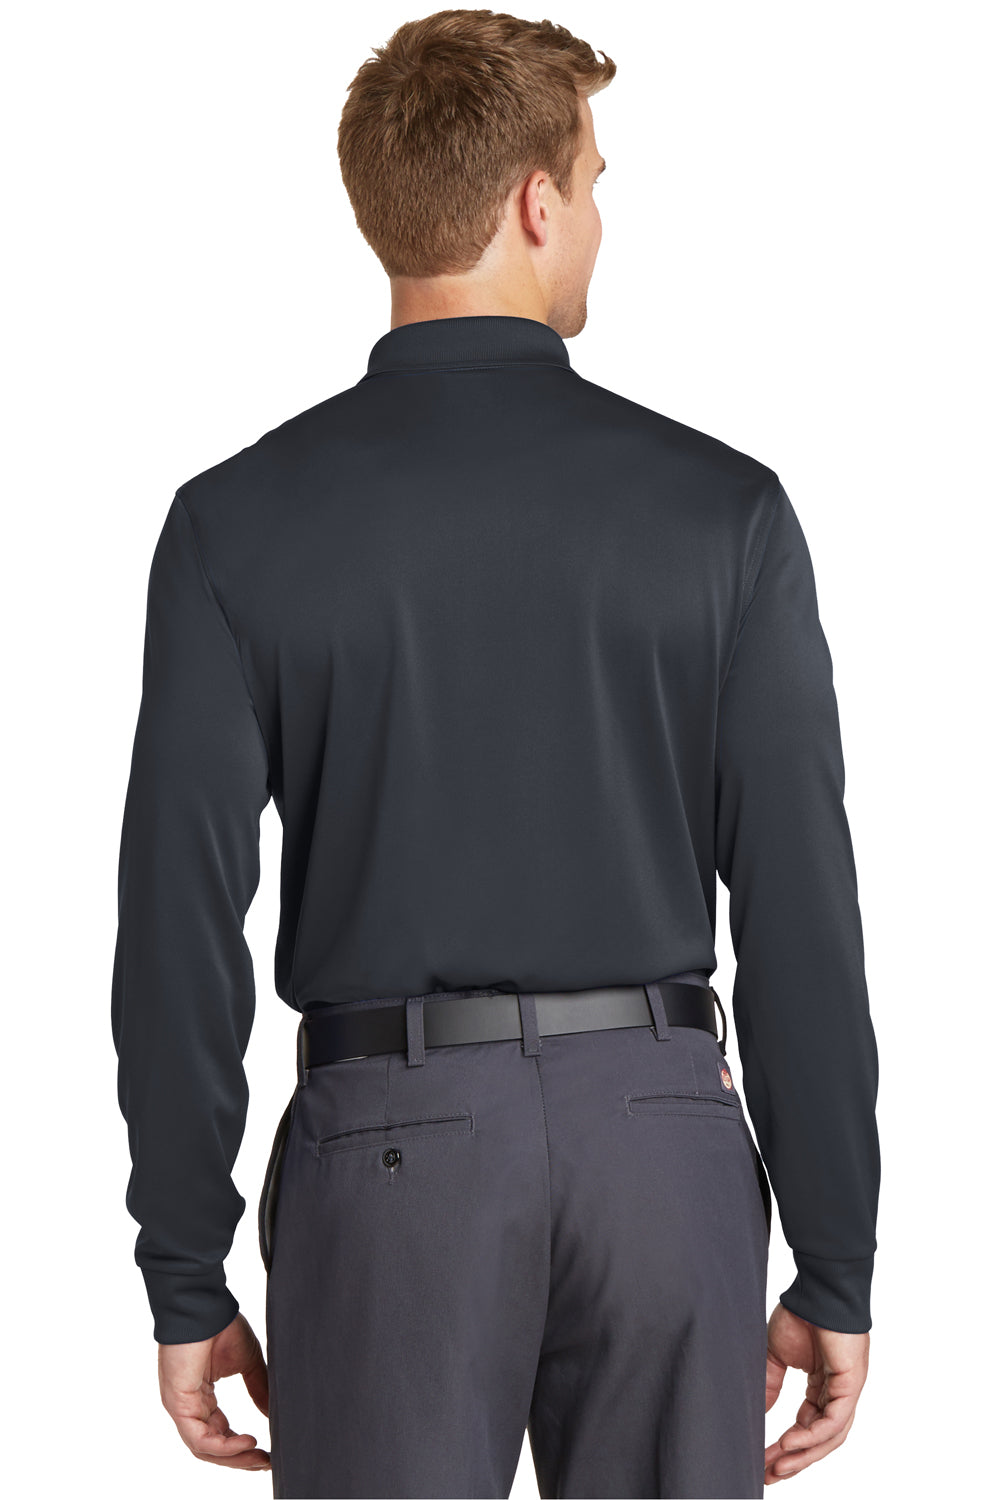 CornerStone CS412LS Mens Select Moisture Wicking Long Sleeve Polo Shirt Charcoal Grey Back